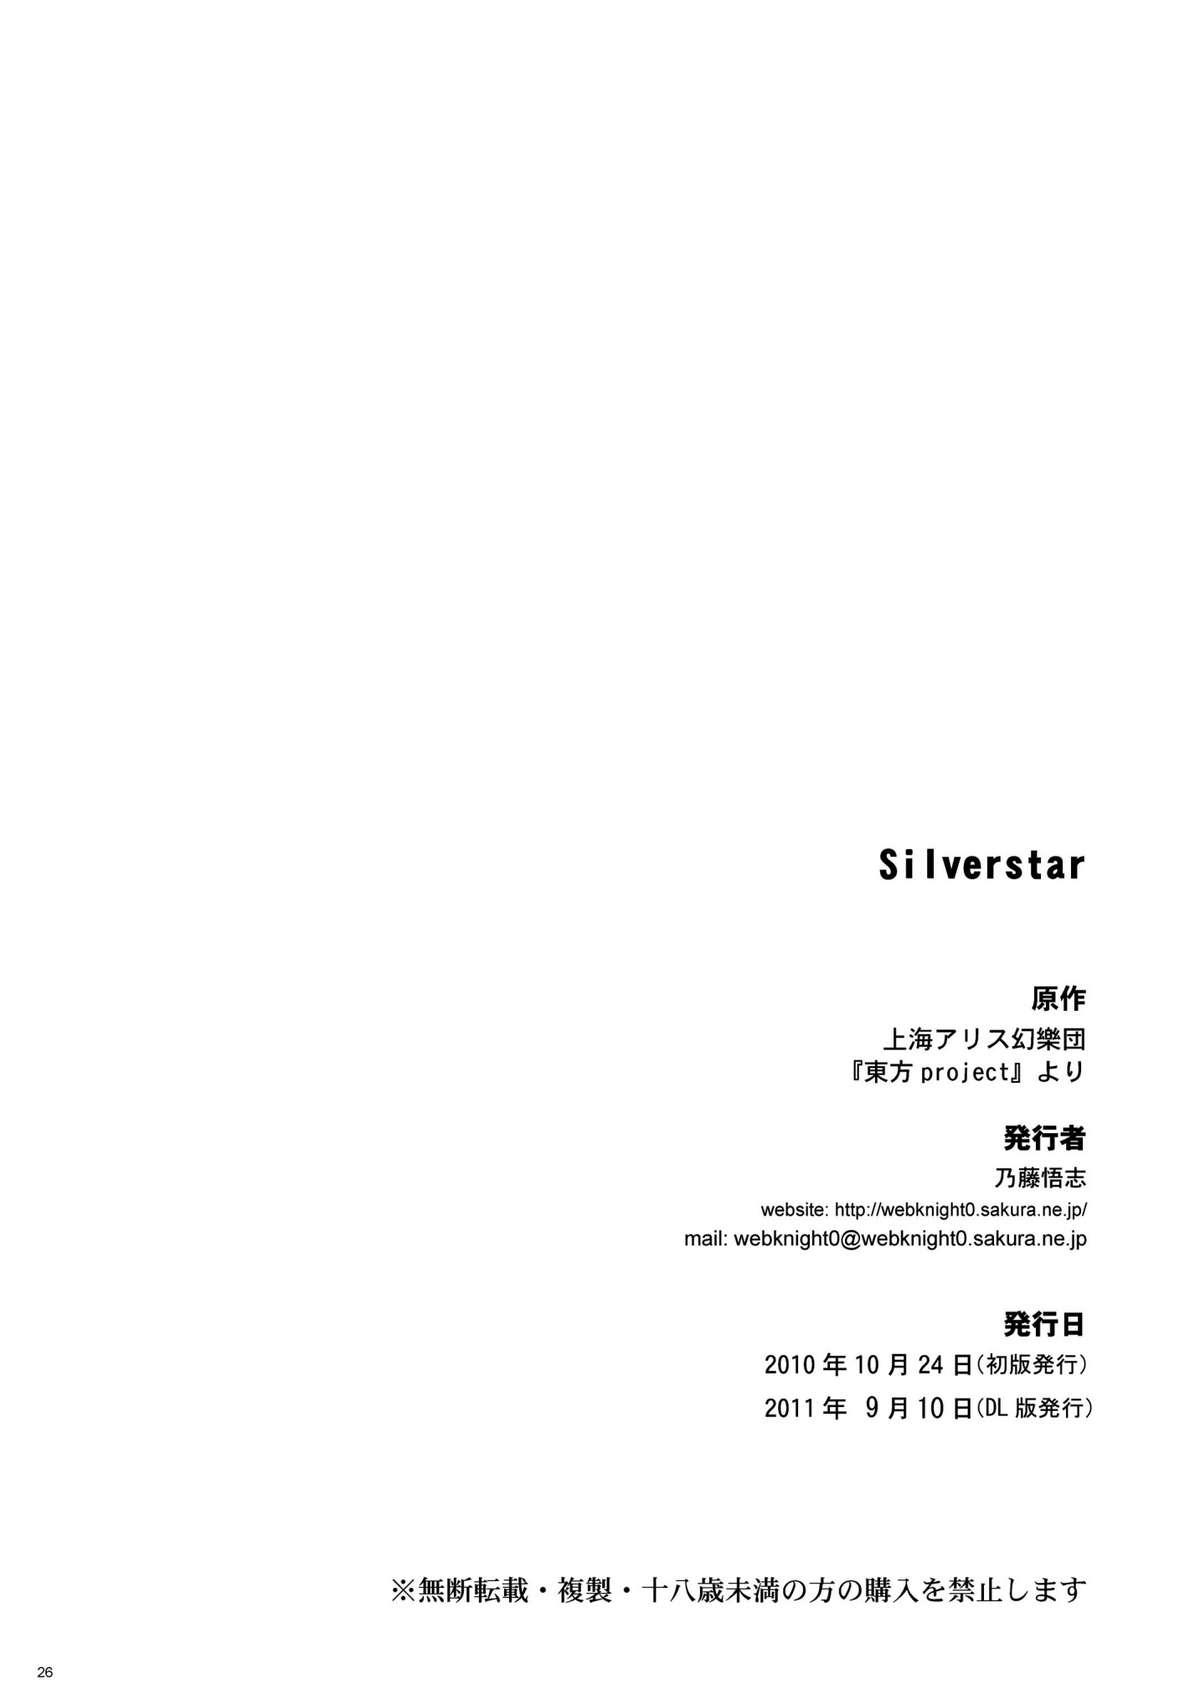 Silverstar 25